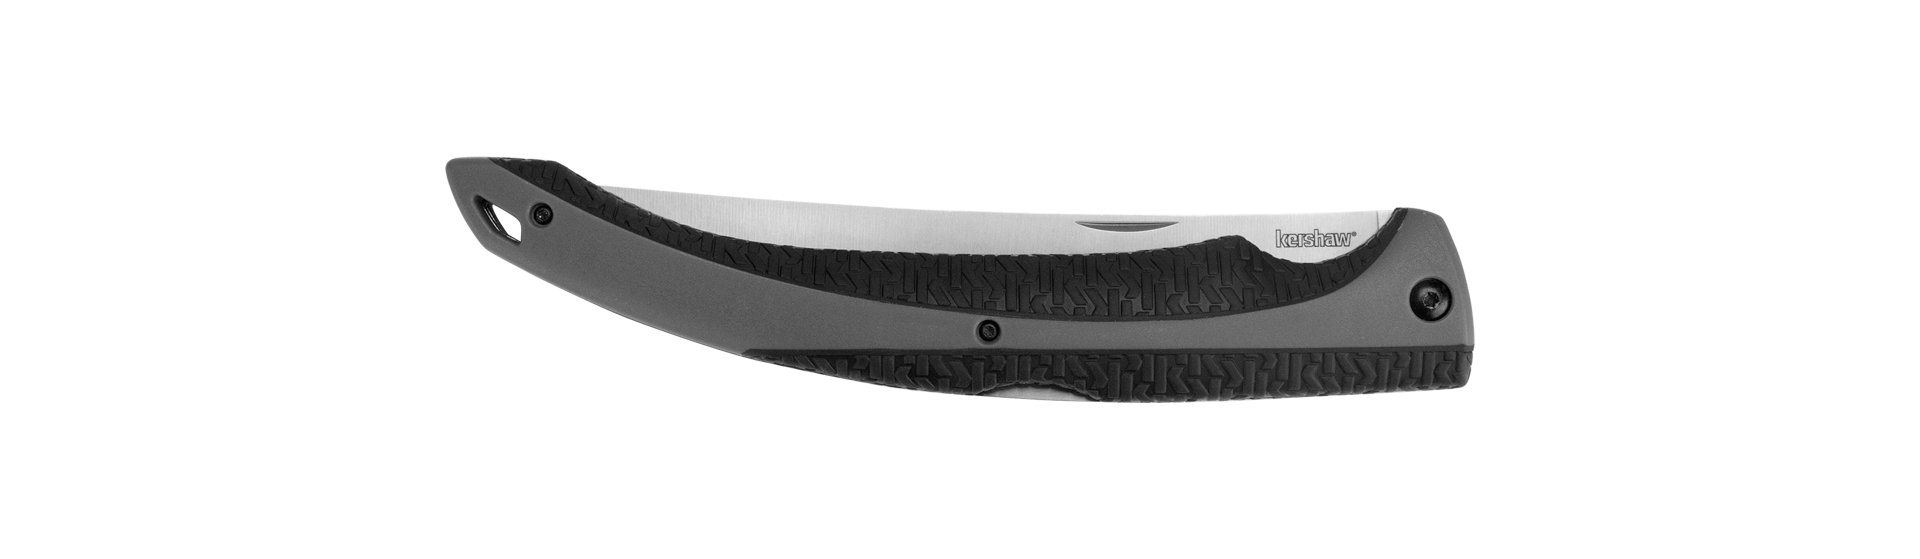 Kershaw Folding Fillet Folding Knife by Kershaw Originals